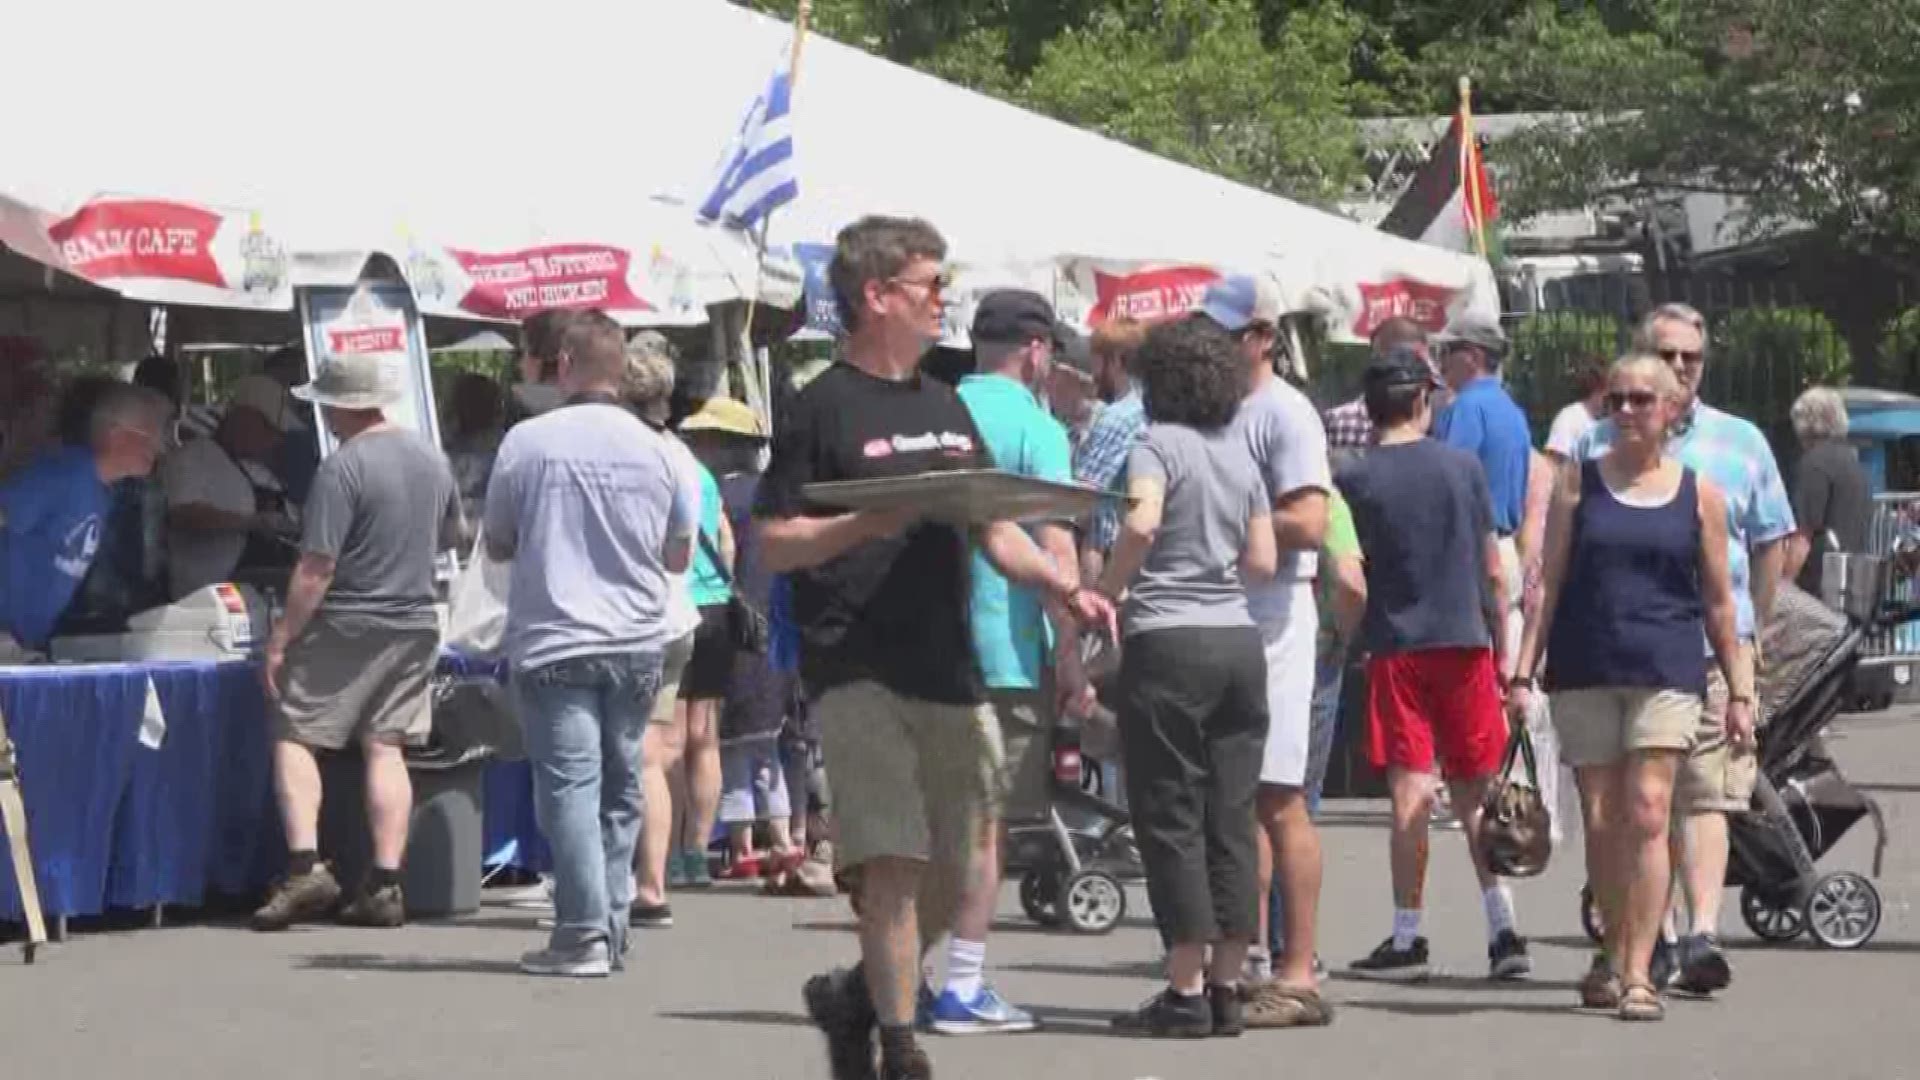 Little Rock's Greek food fest raises money for local charities